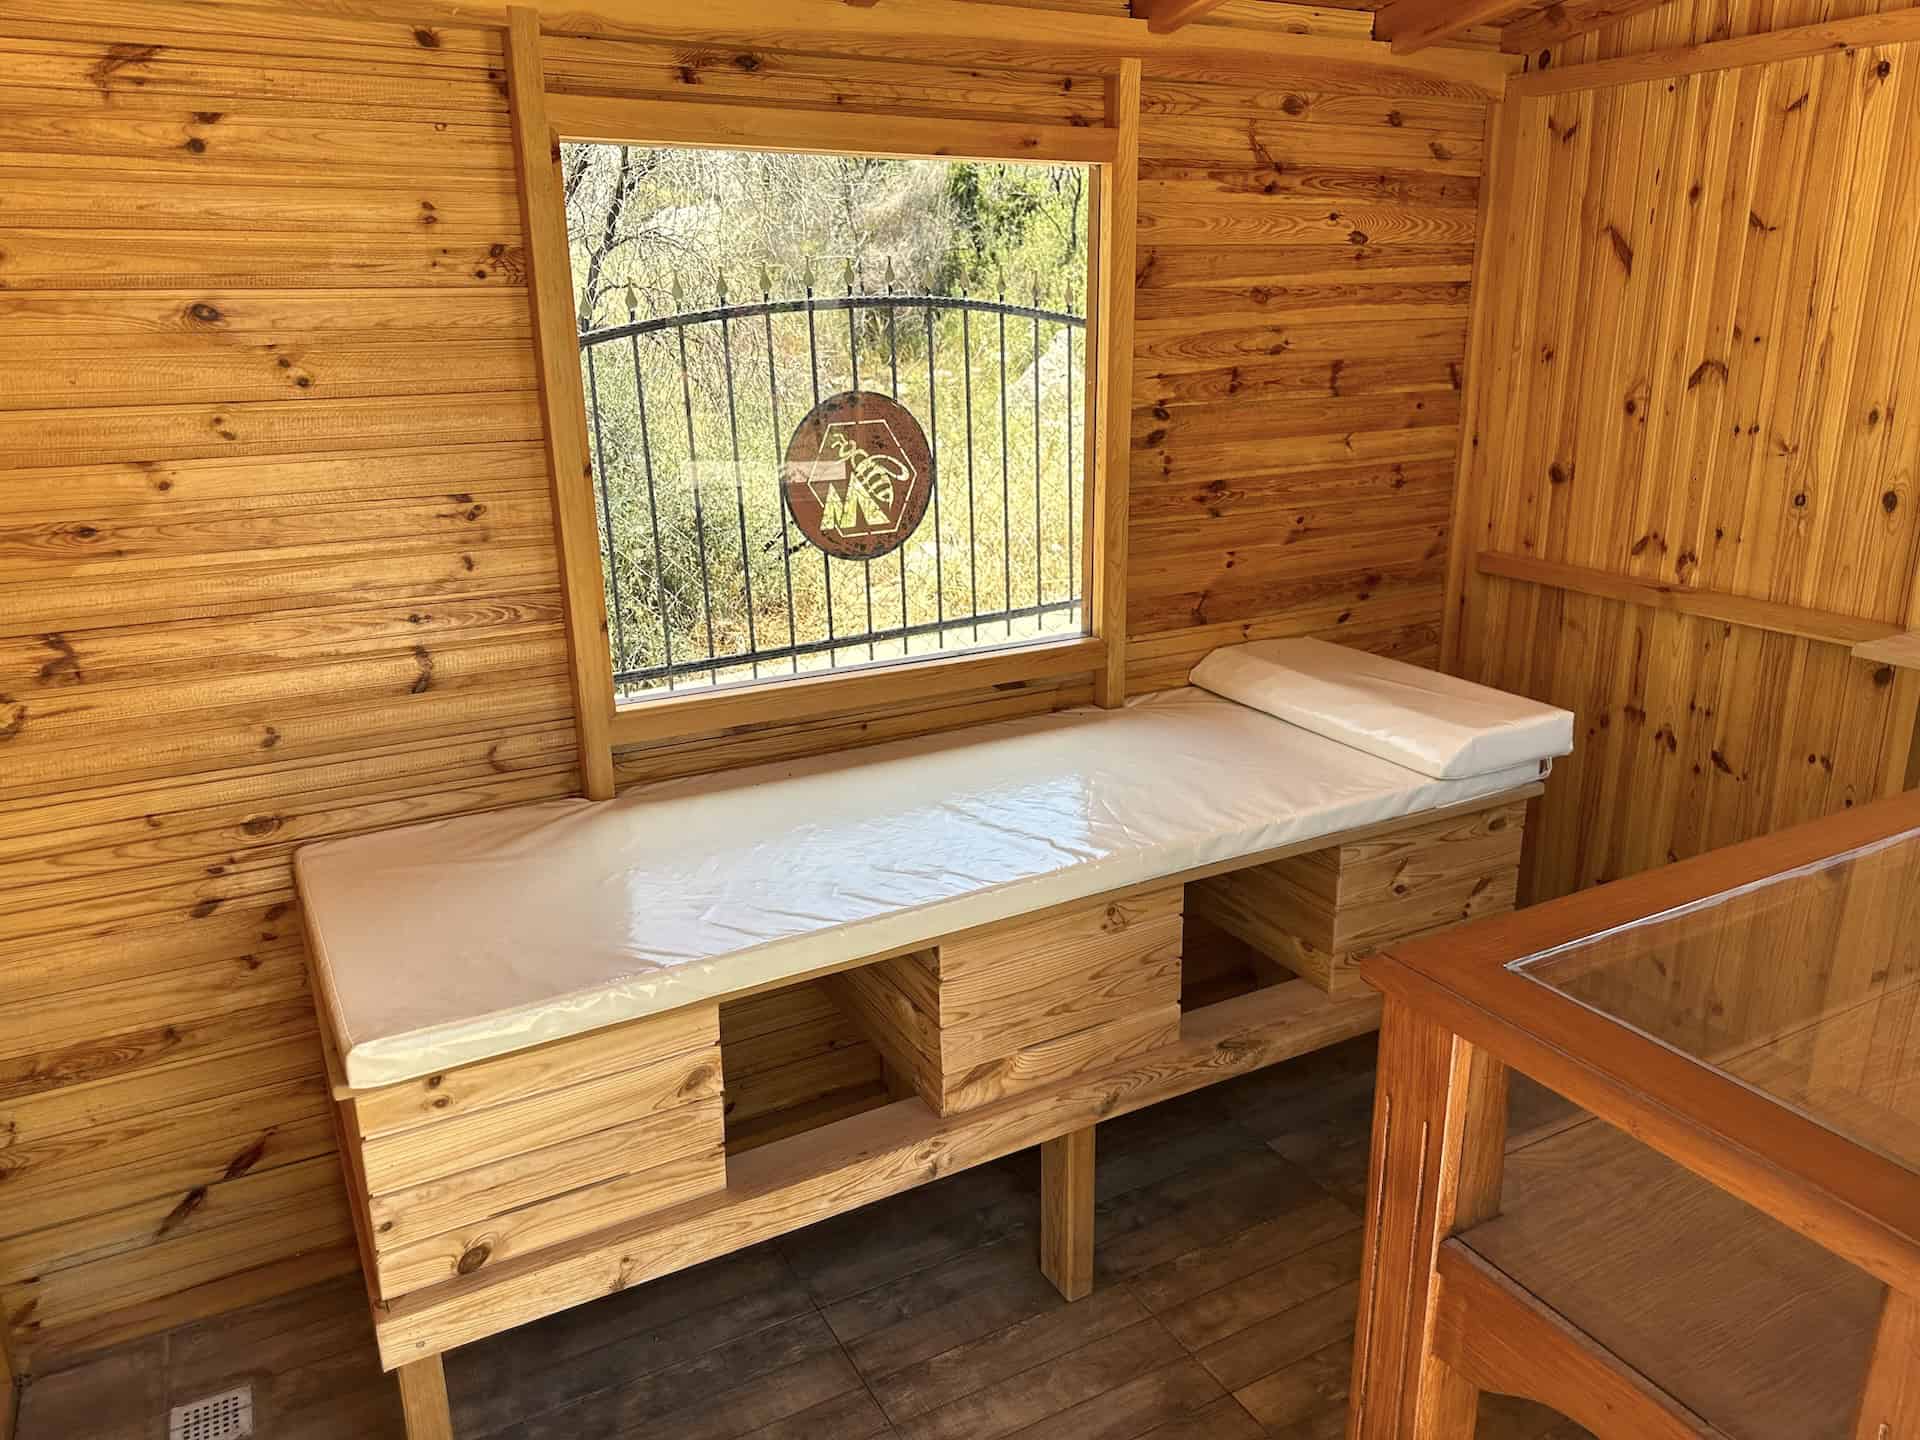 First apitherapy house at the Marmaris Honey House on the Bozburun Peninsula, Turkey